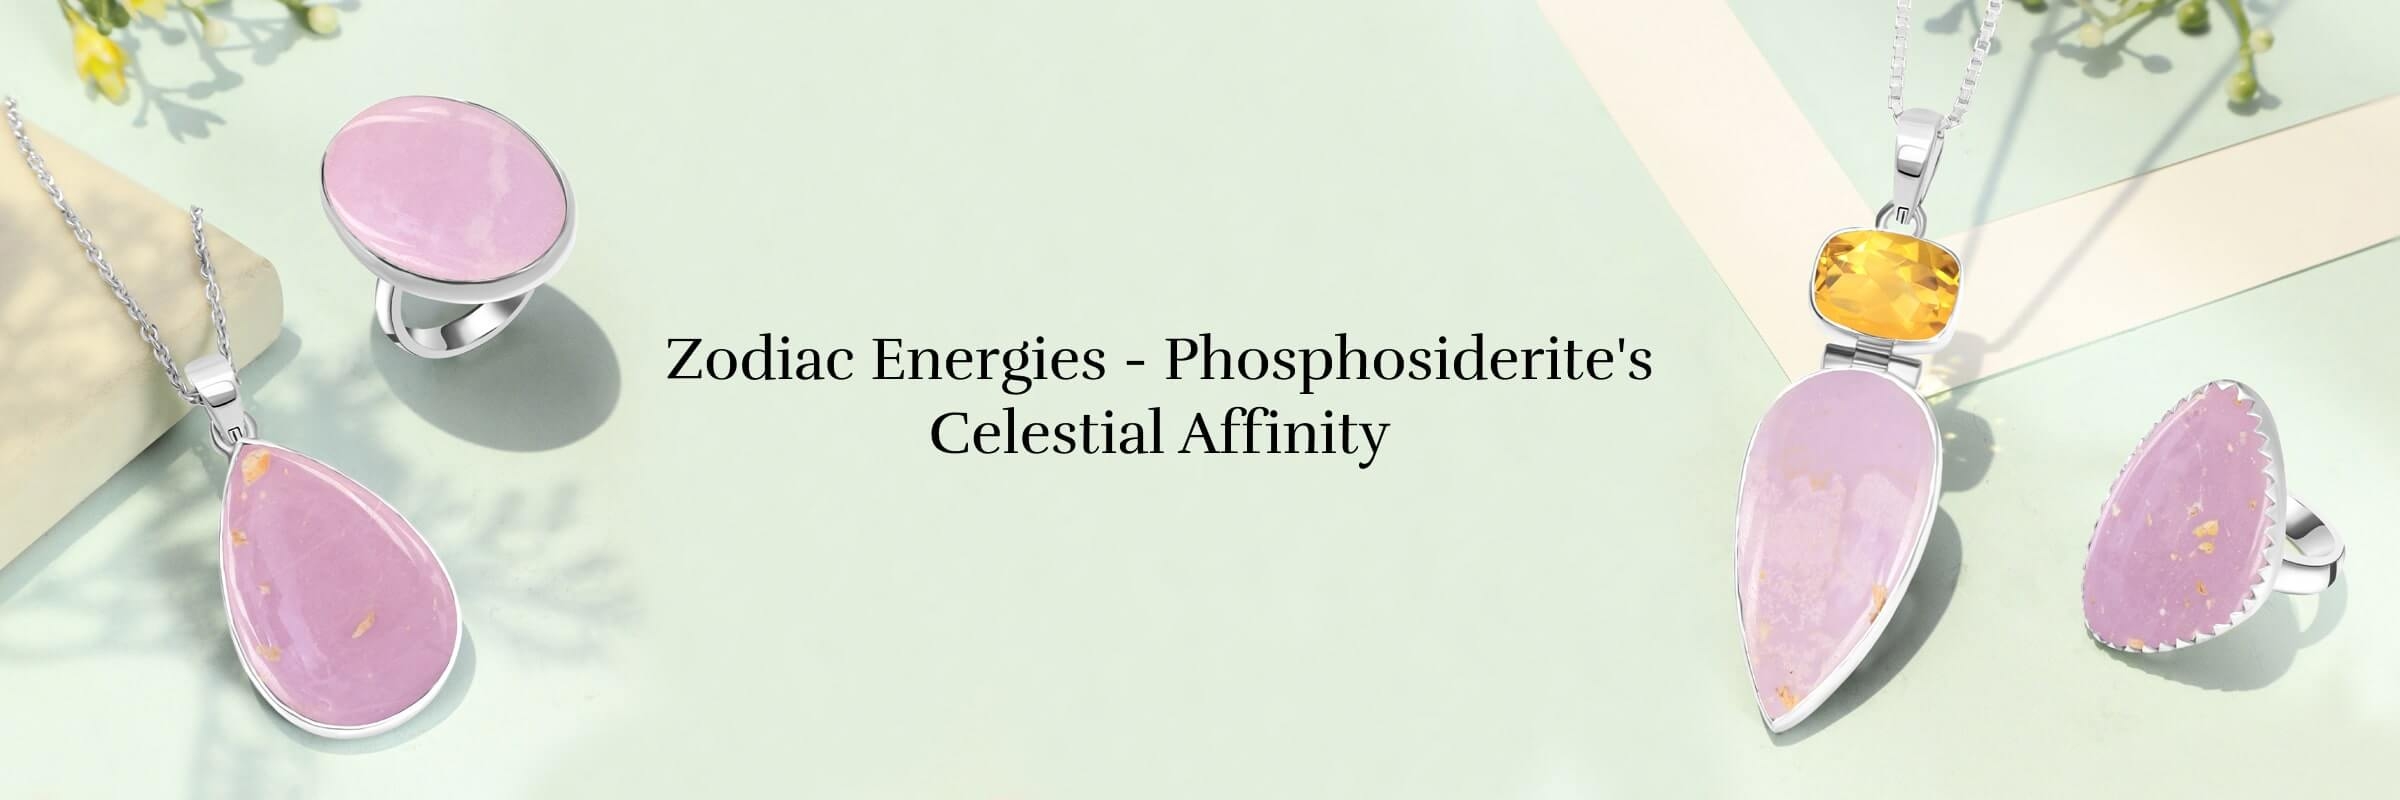 Phosphosiderite: Zodiac sign